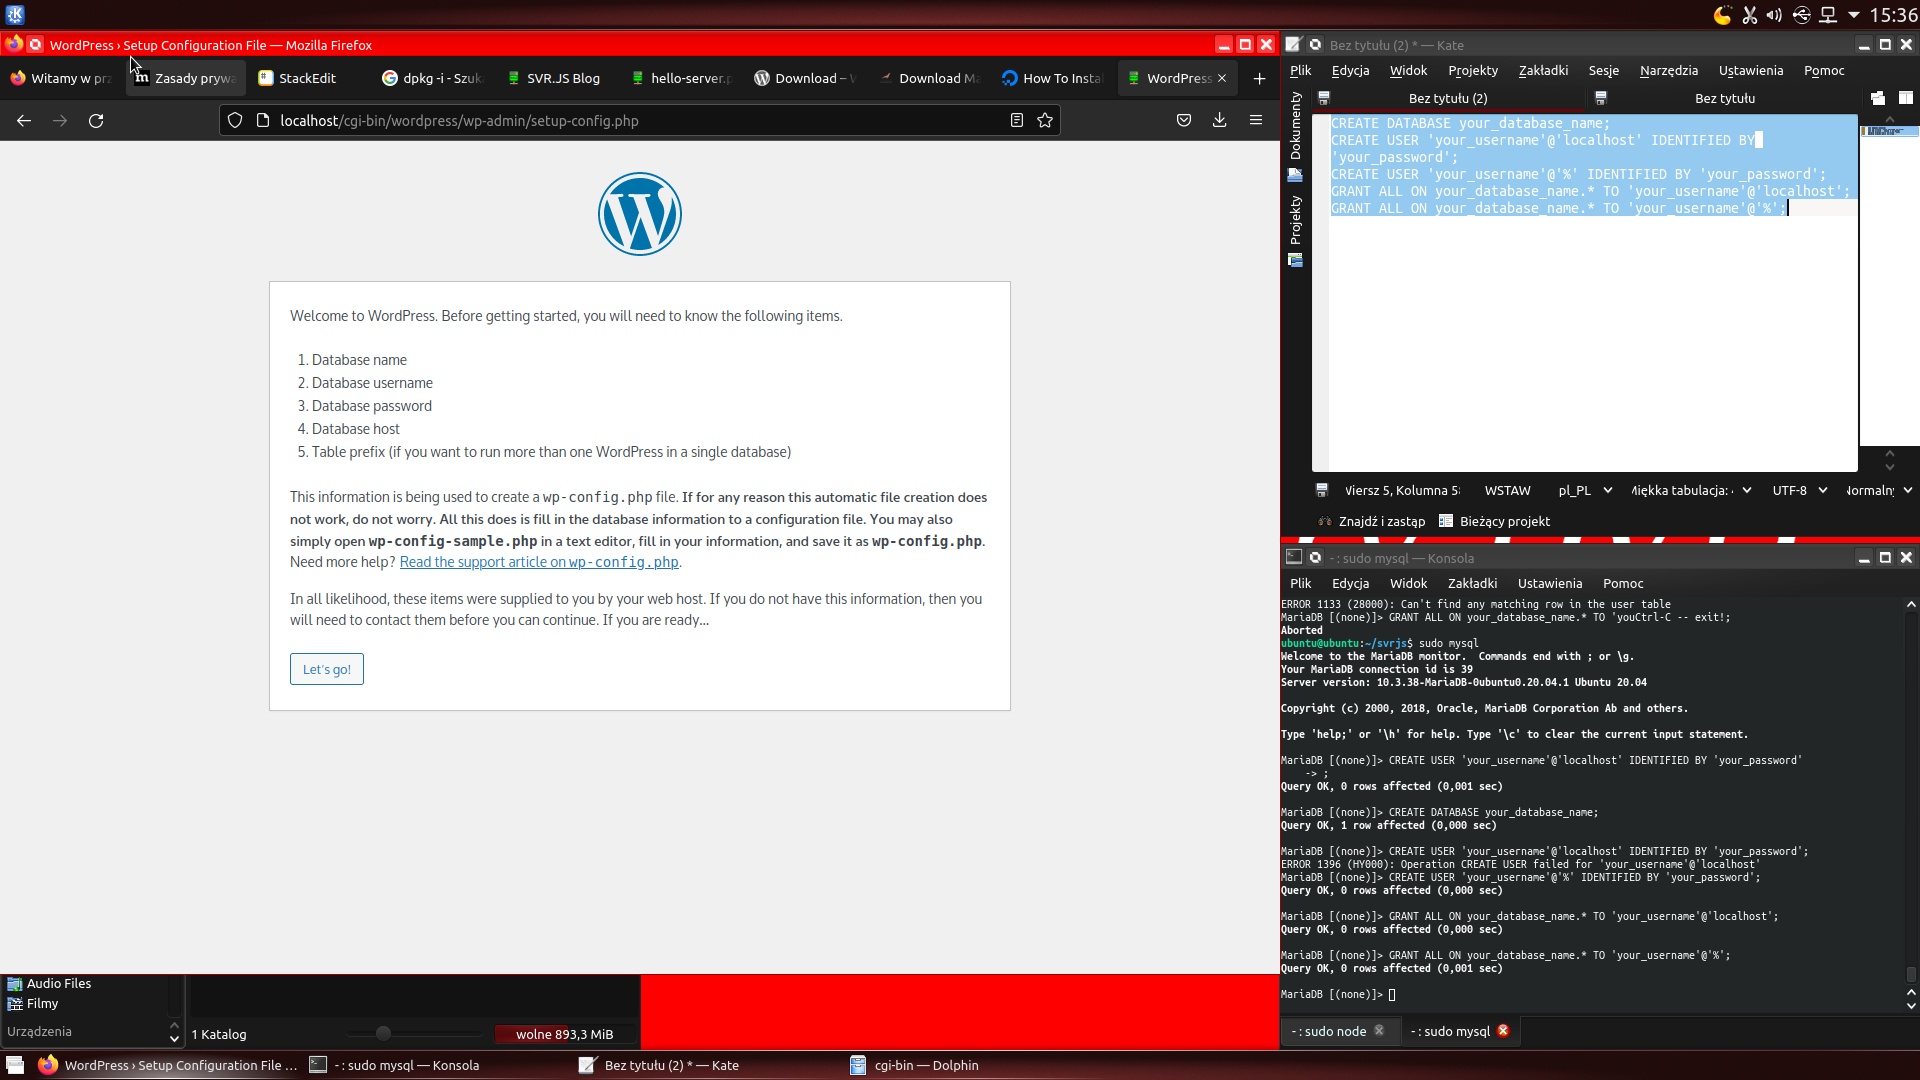 WordPress setup screen